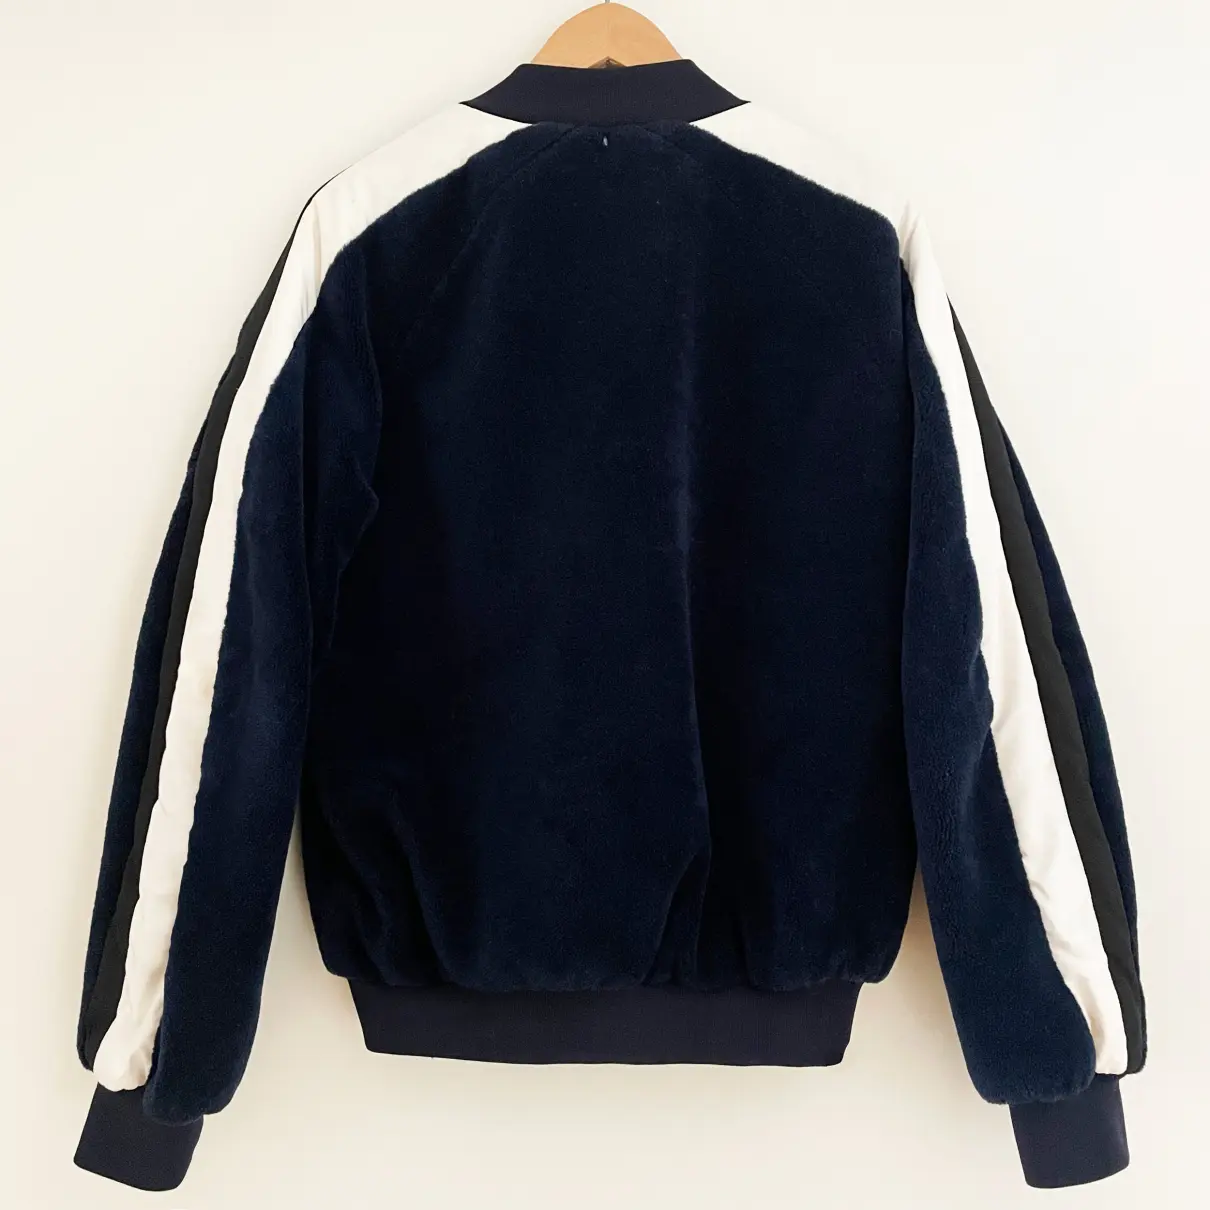 Buy Sportmax Wool jacket online